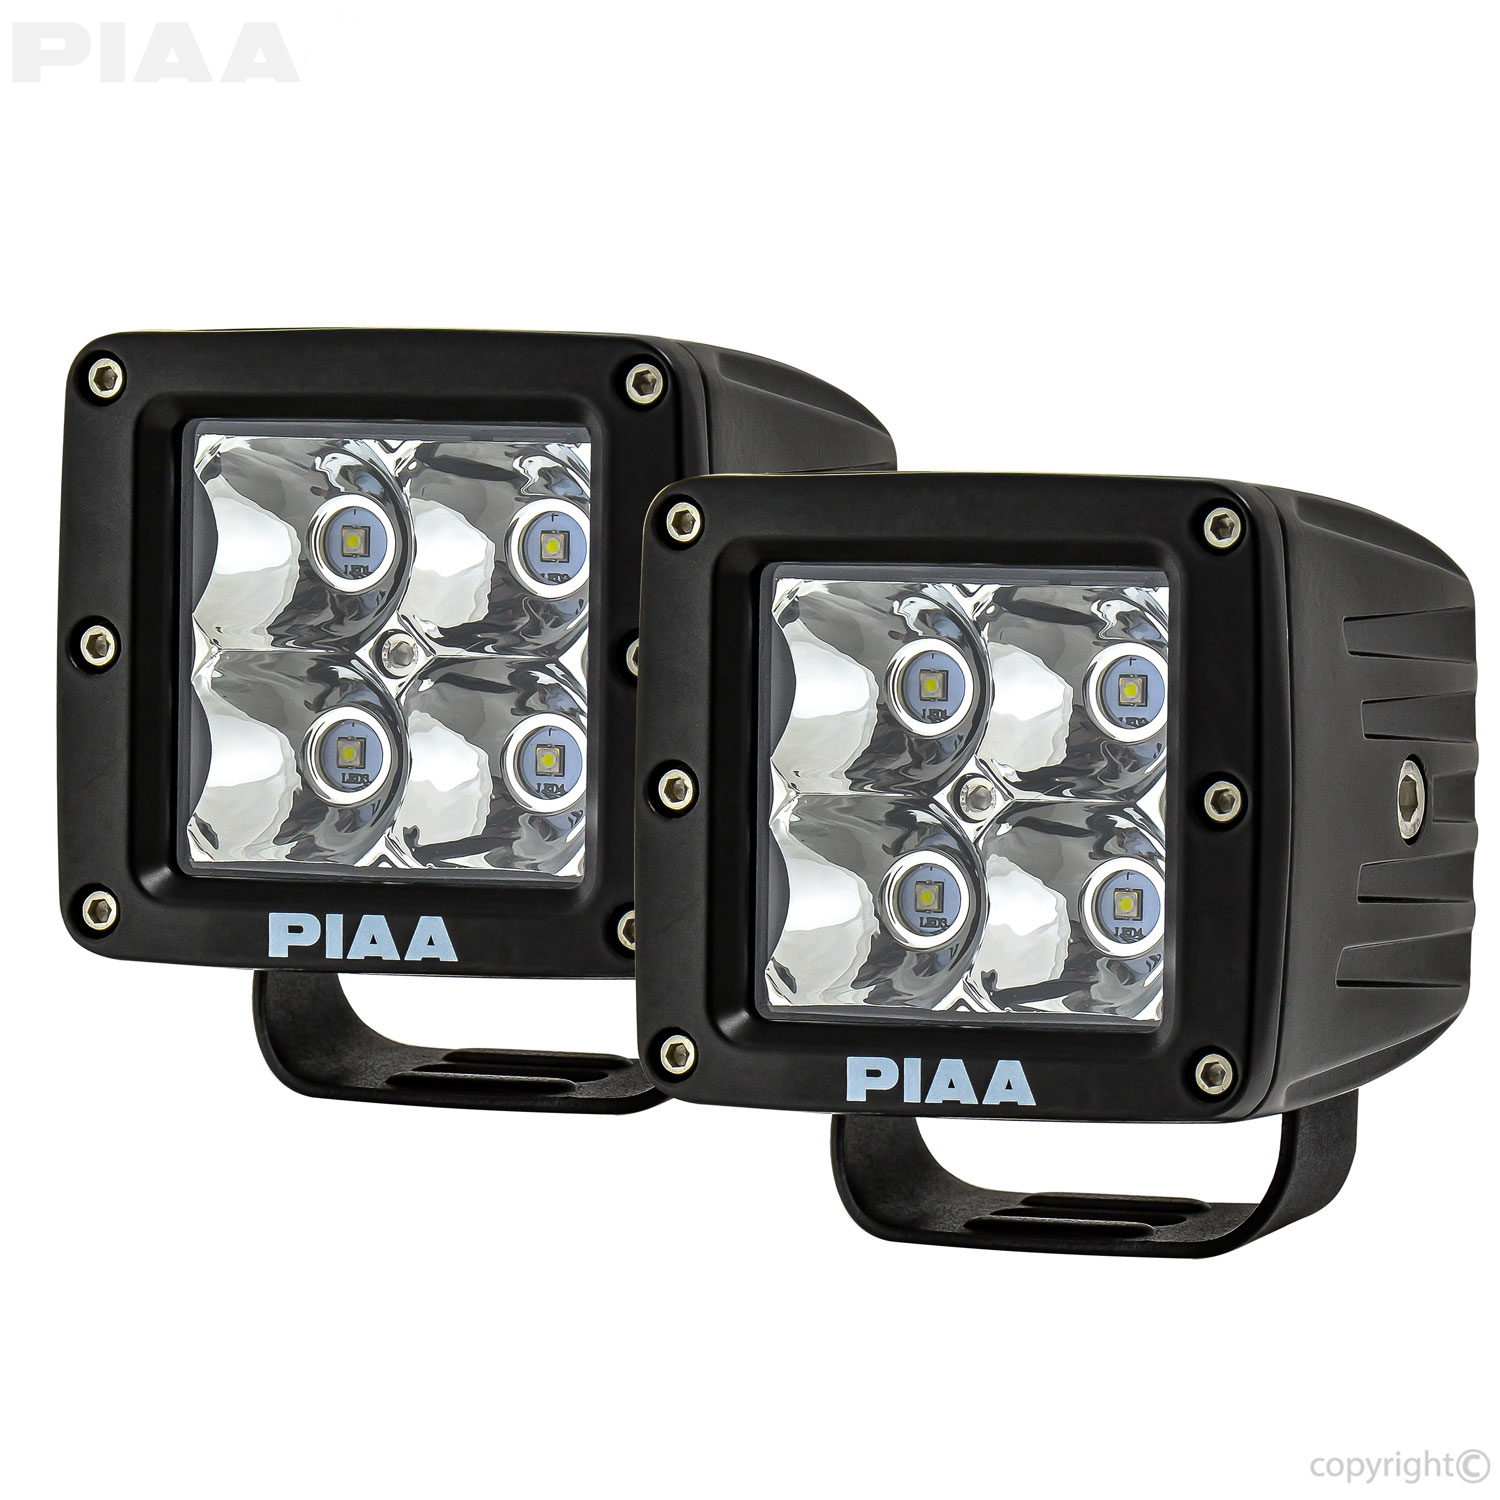 PIAA LED Lights for Yamaha Motorcycles